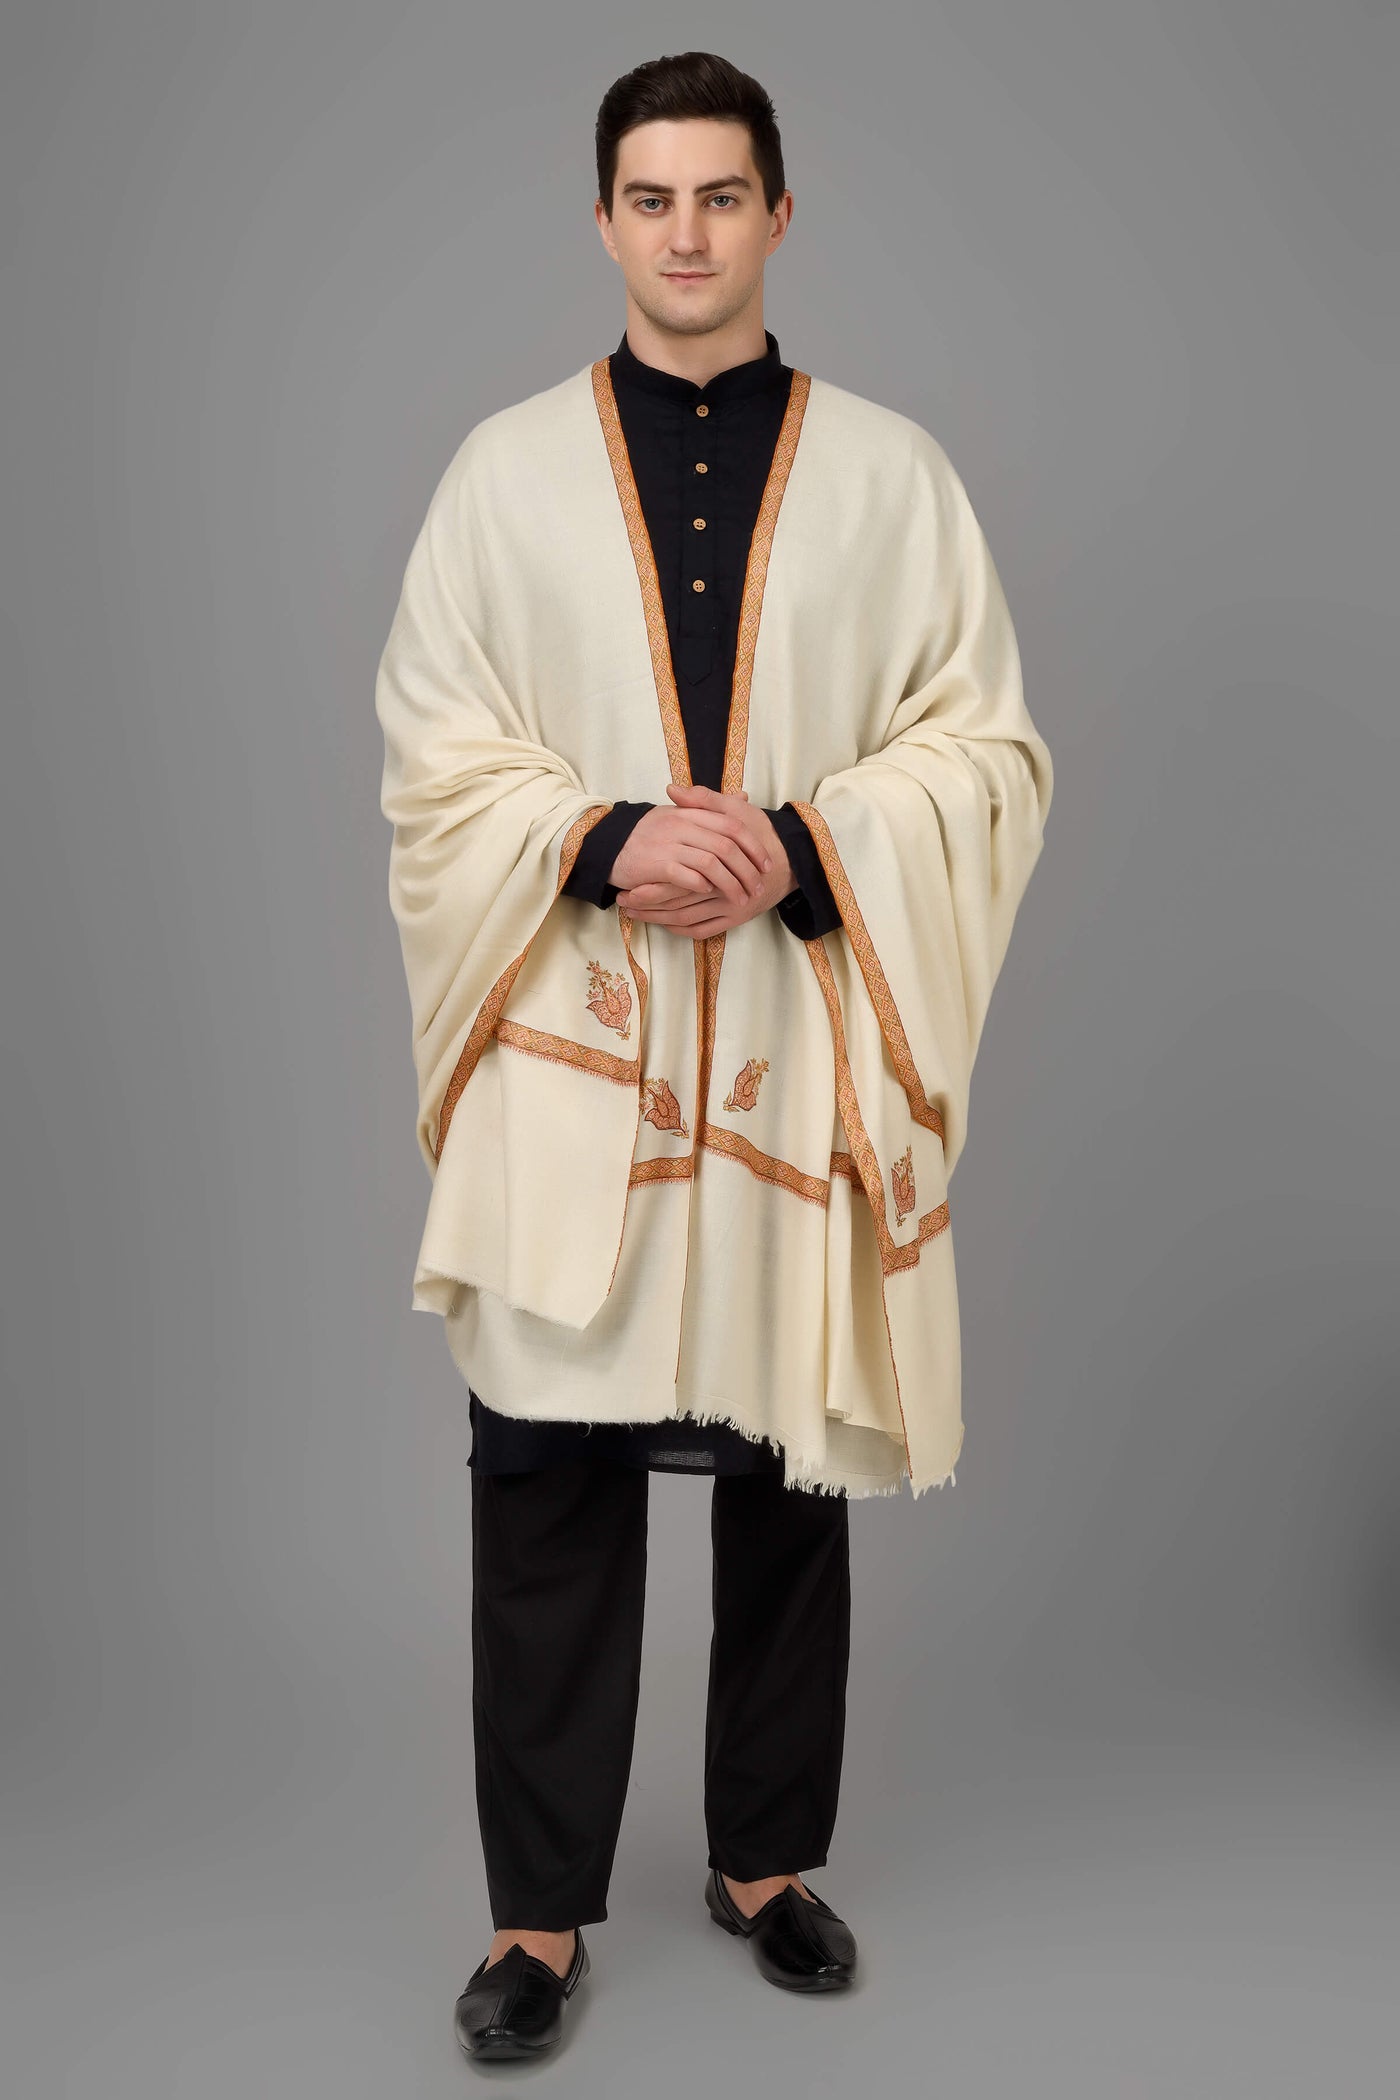 White Pashmina hashidaar mens shawl